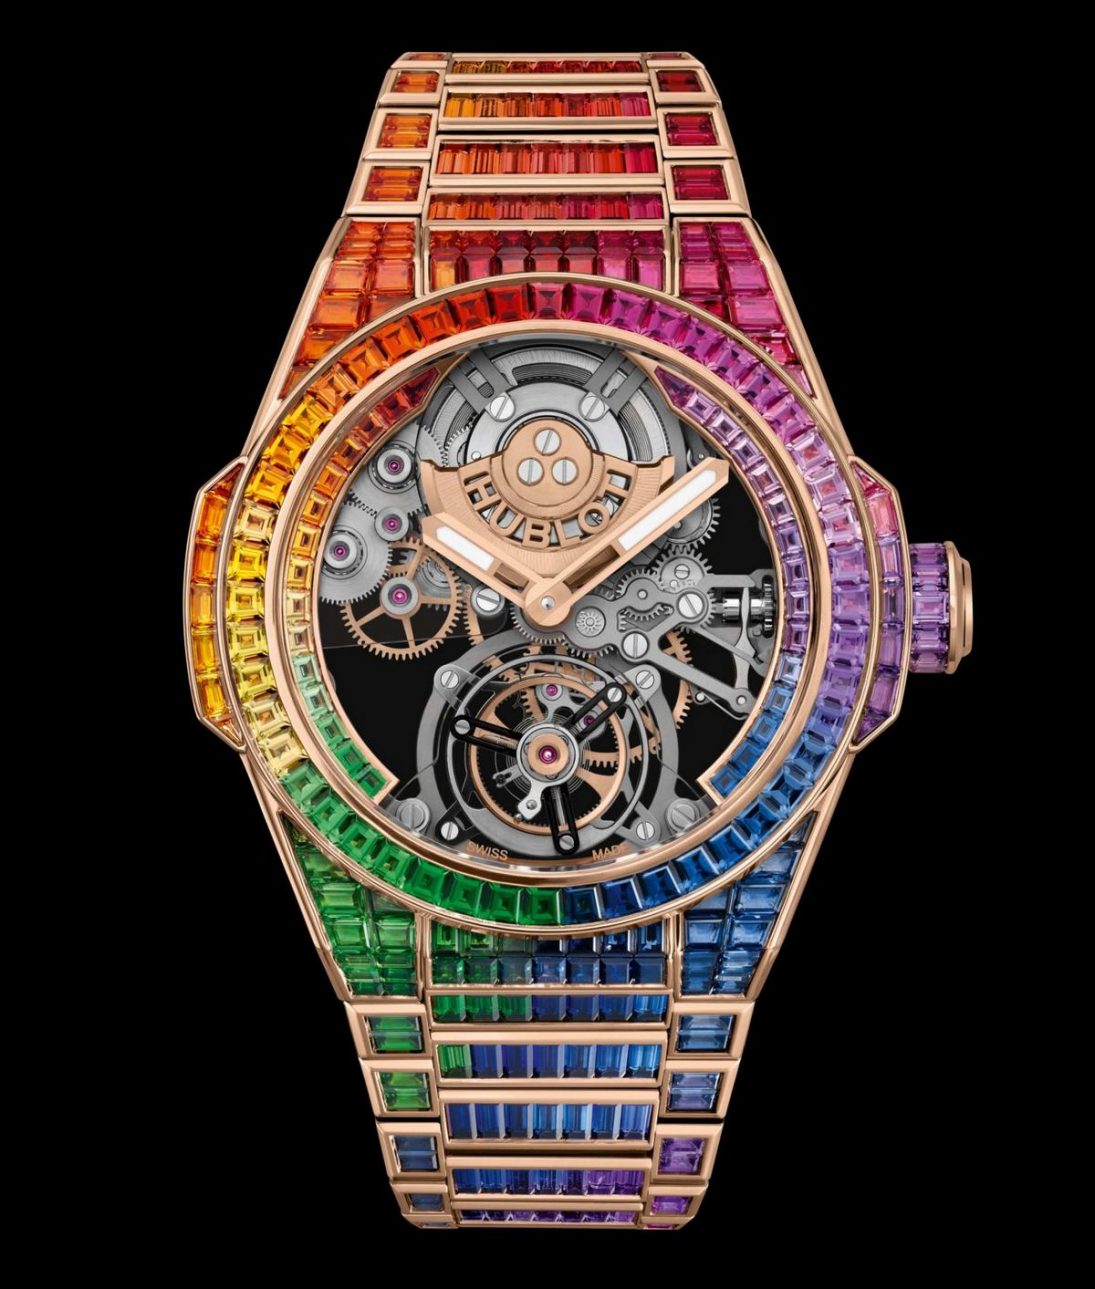 Hublot has launched a pair of 790,000 Big Bang Tourbillon watches that